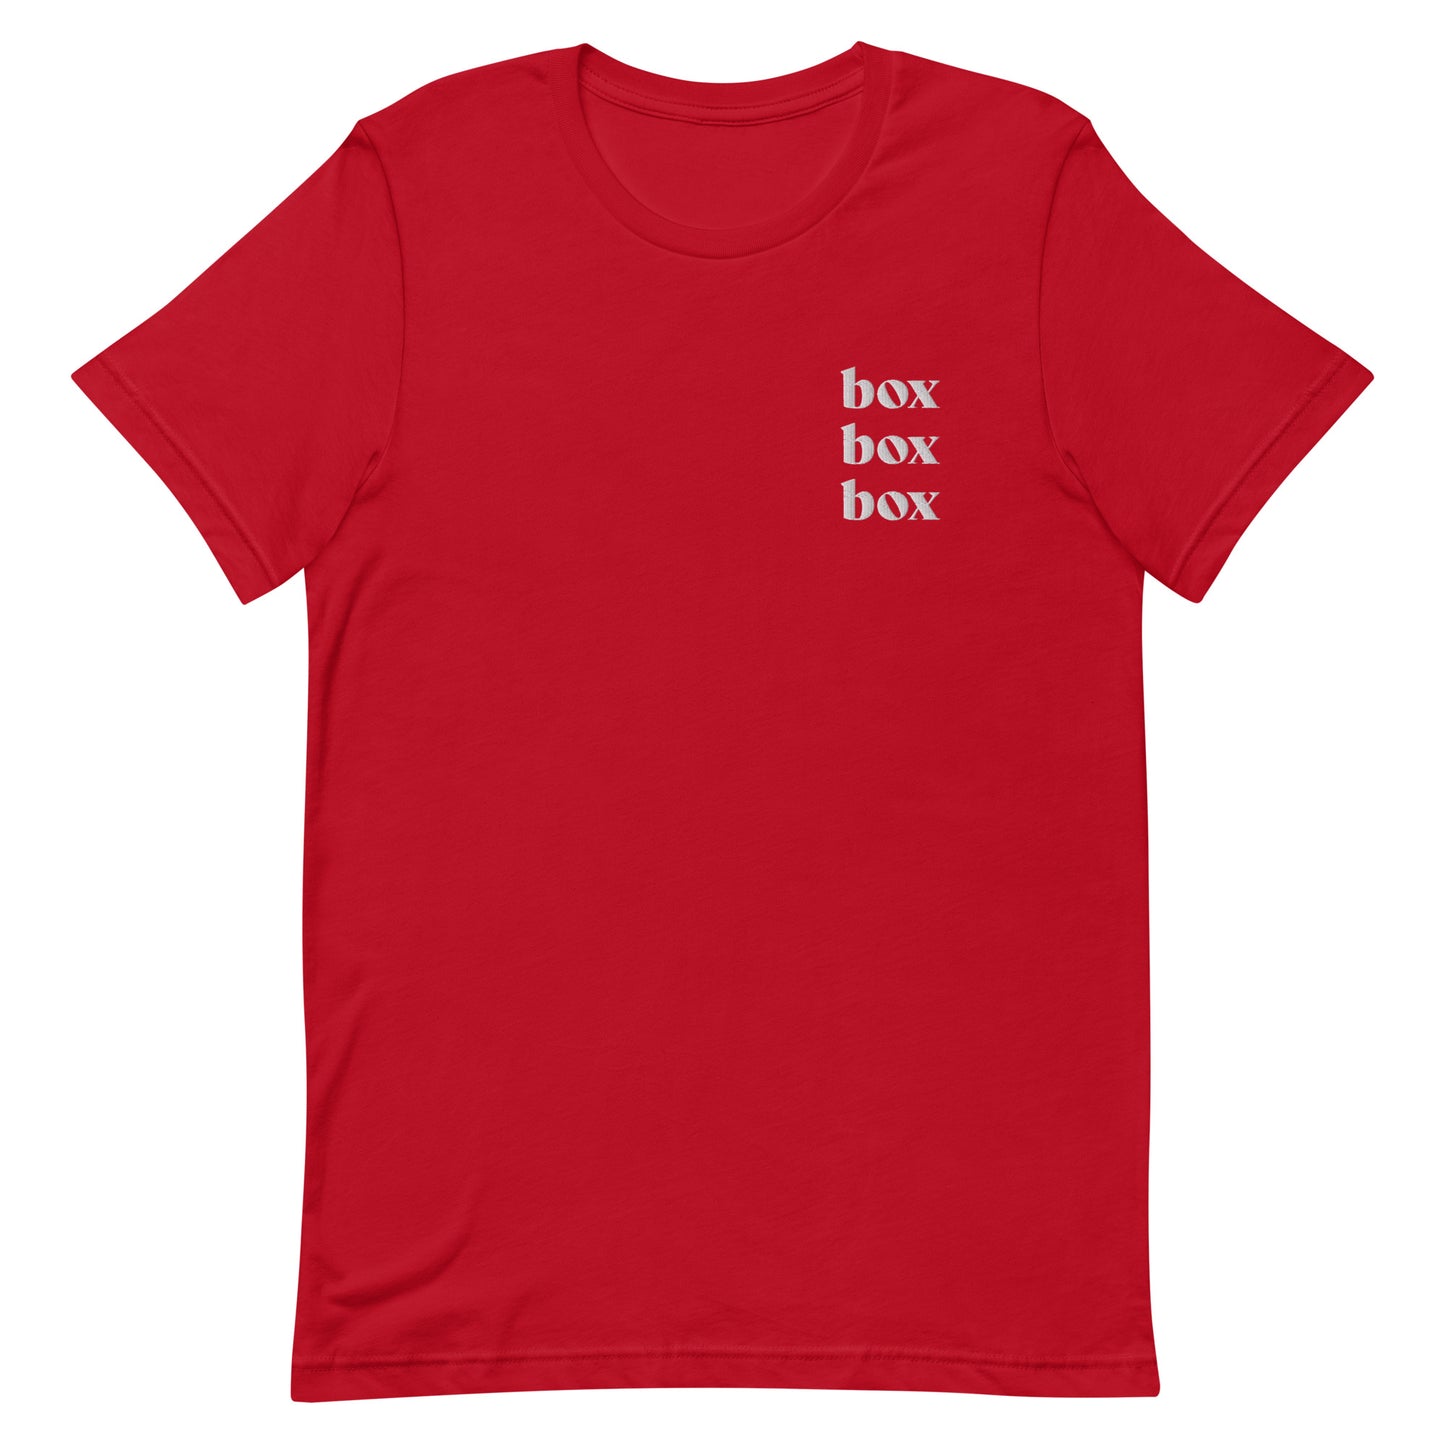 Box Box Box Embroidered Shirt (white text)